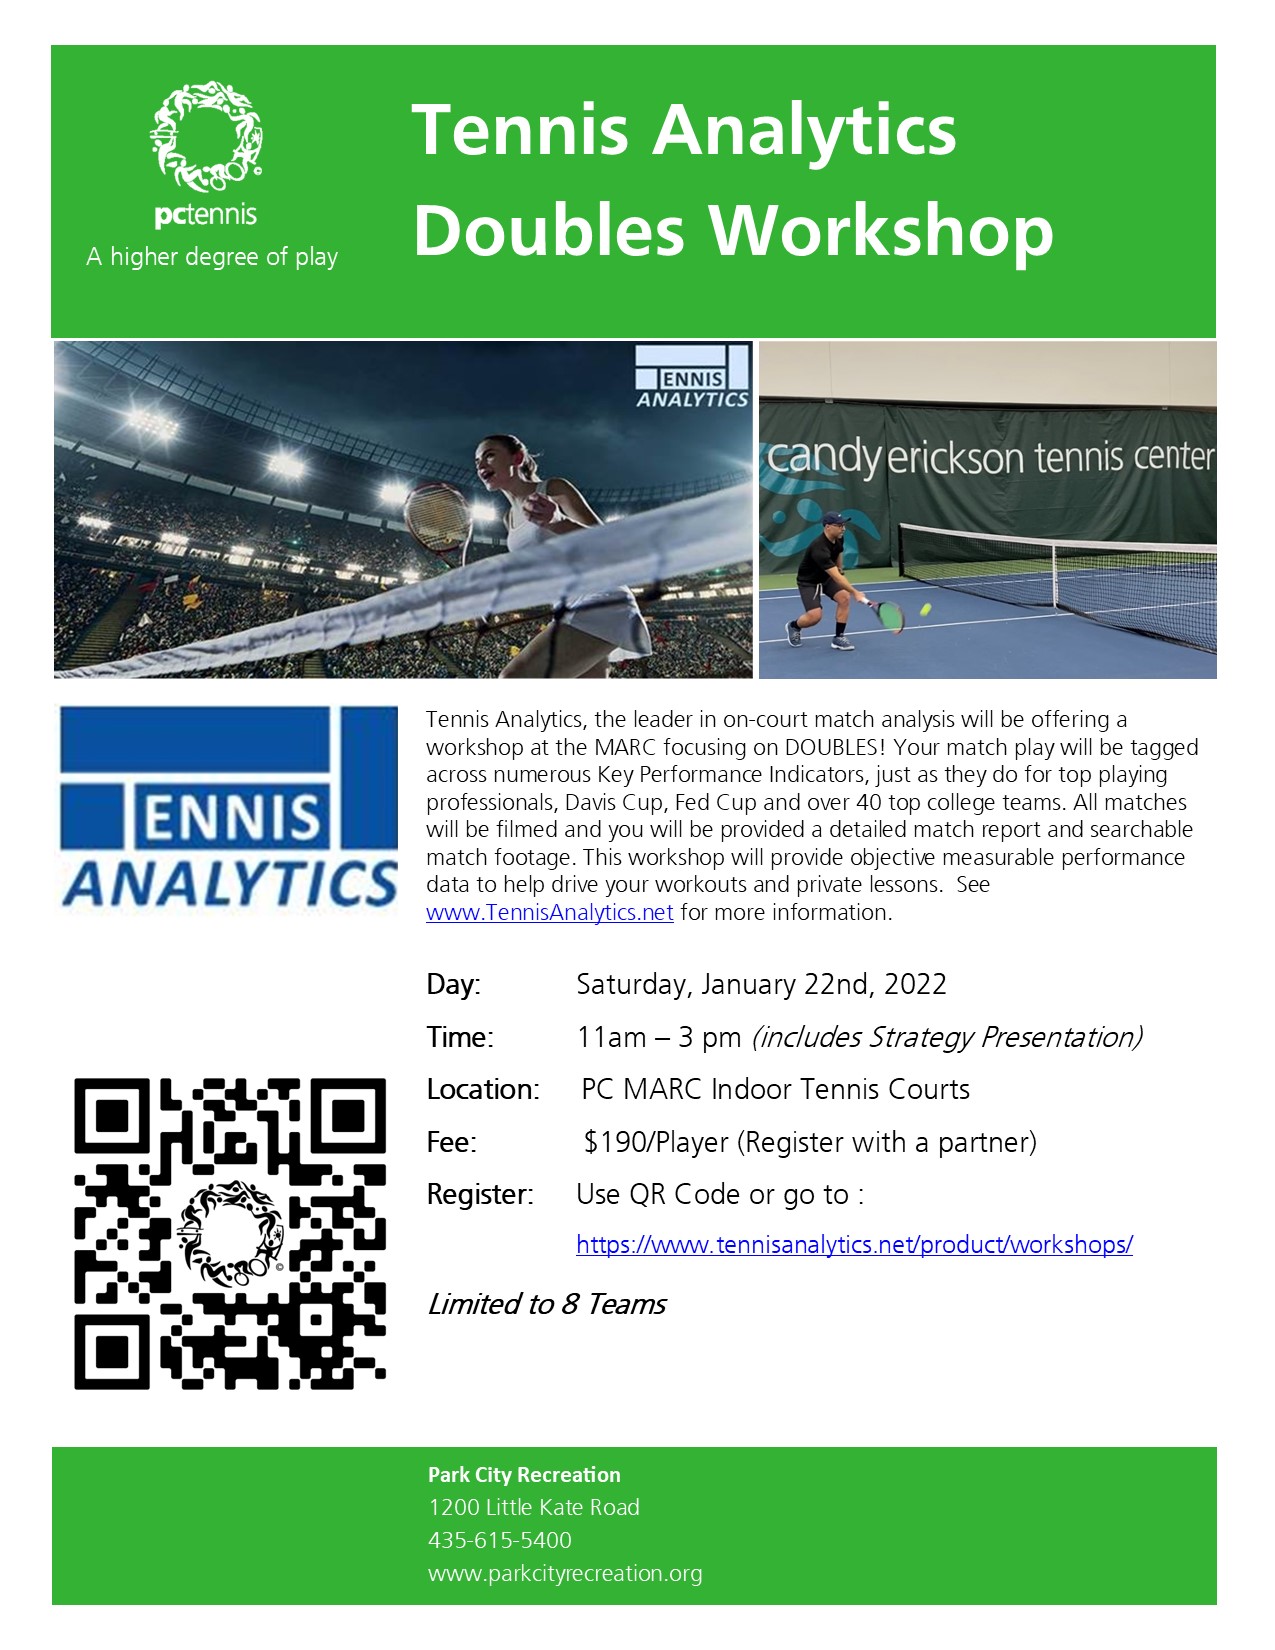 Tennis Analytics Doubles Event - Winter 2022